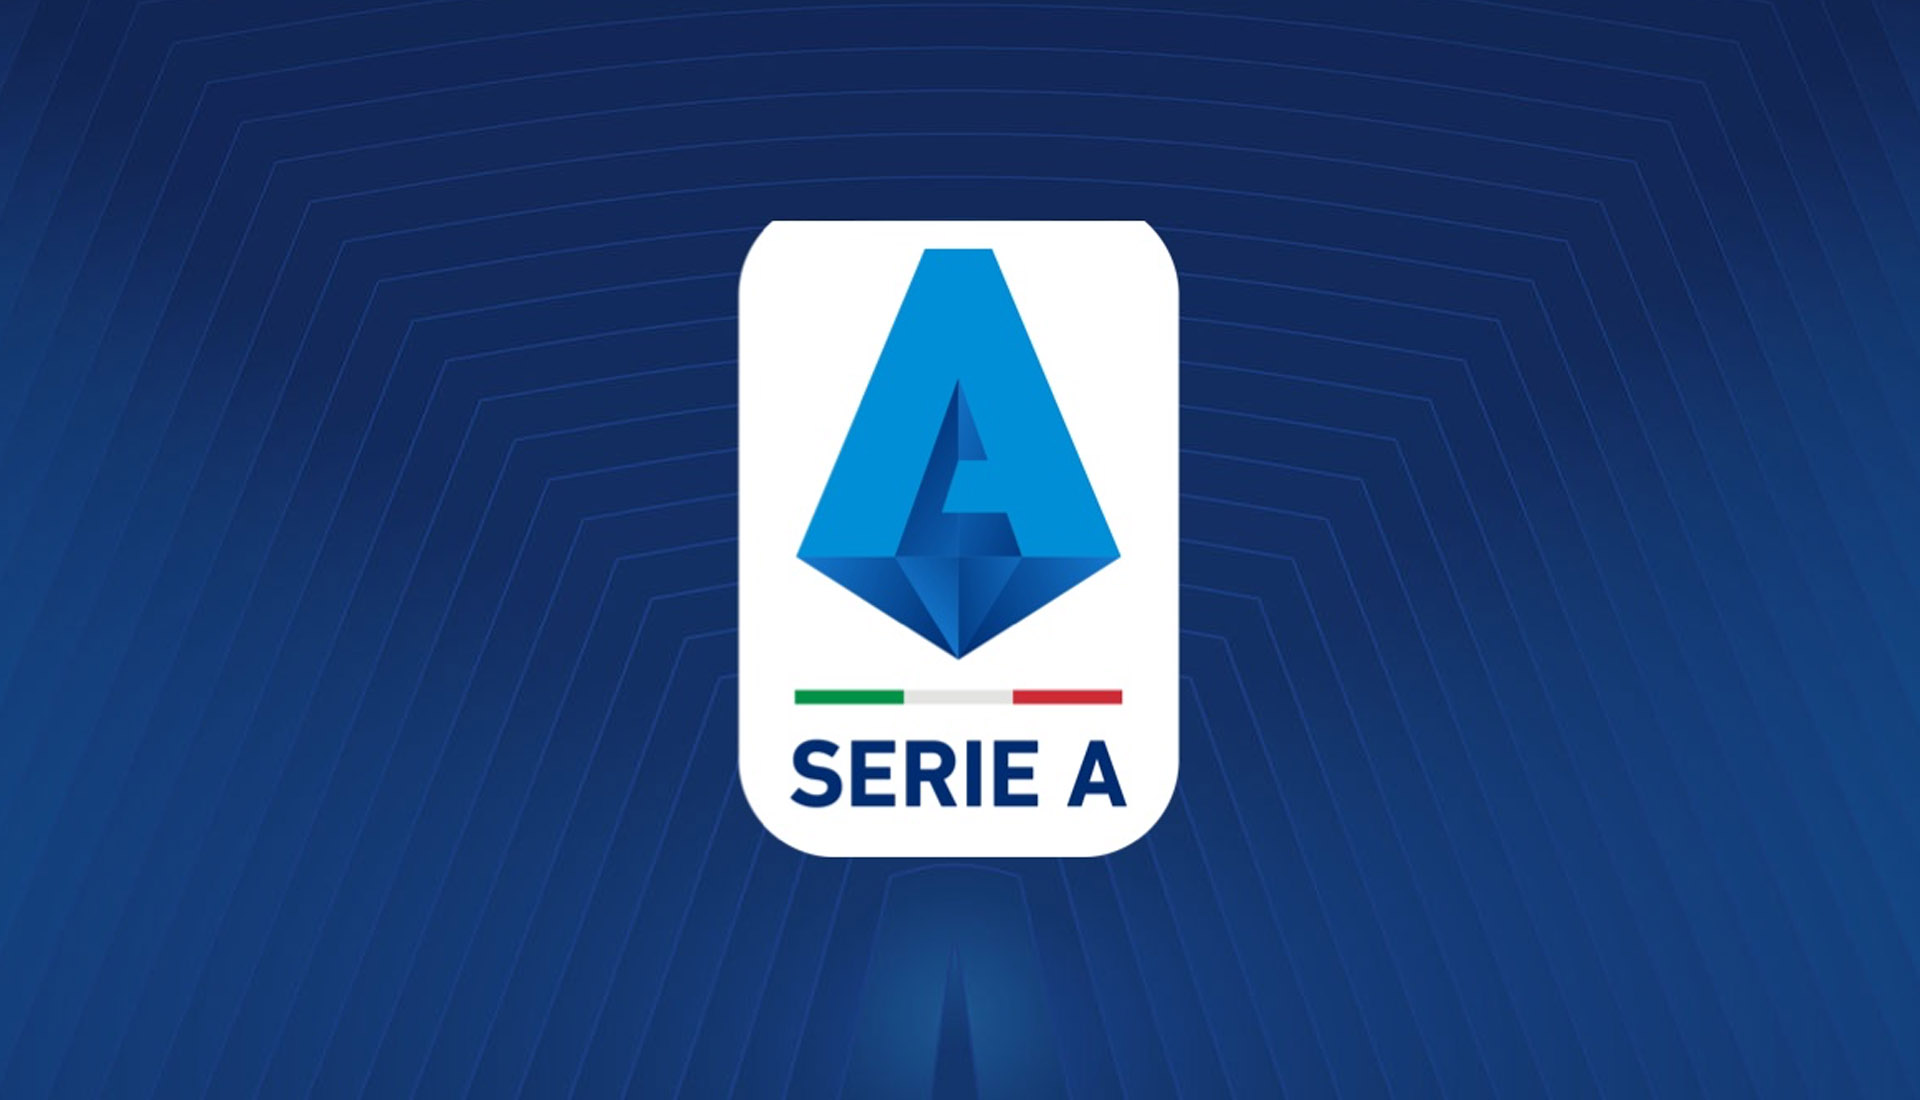 1-serie-a-logo-new.jpg